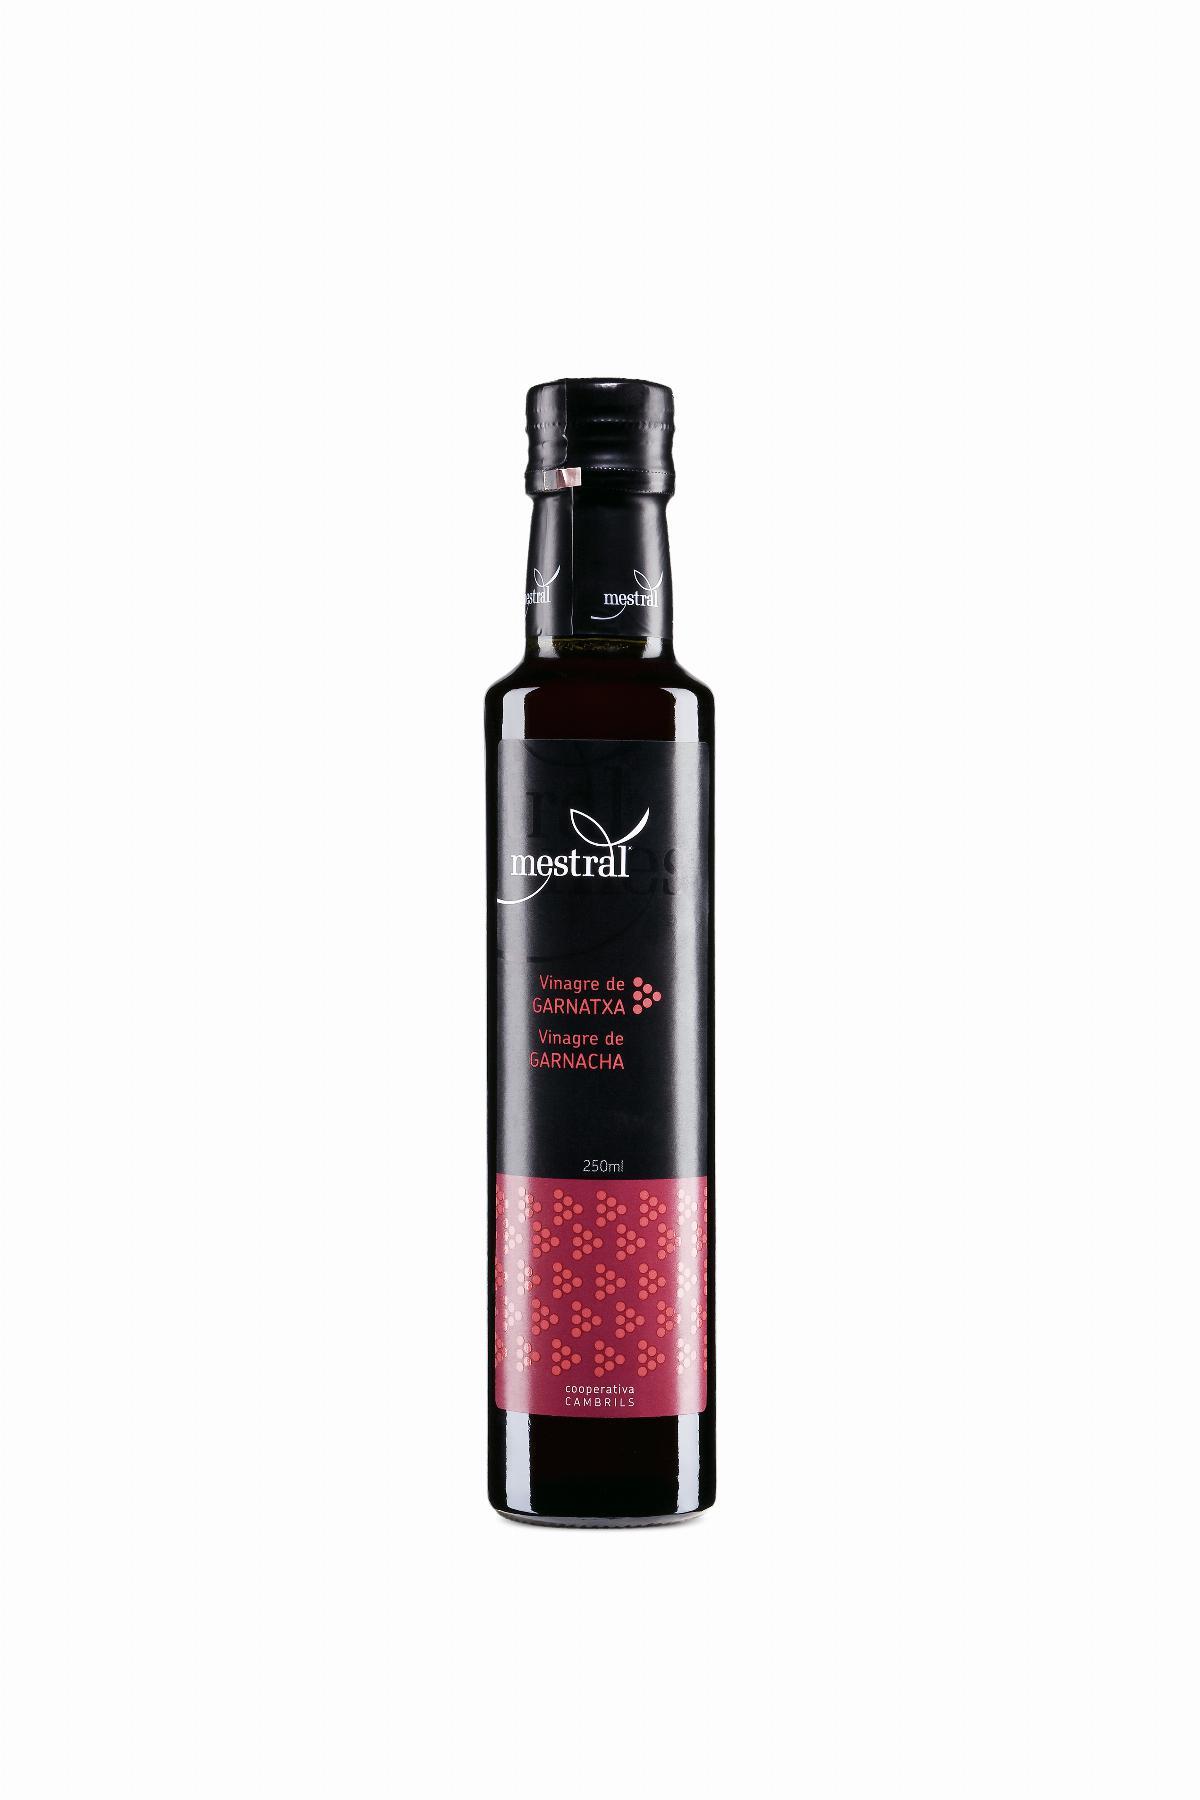 Vinagres - Vinagre de garnatxa Mestral ampolla 250 ml - Mestral Cambrils